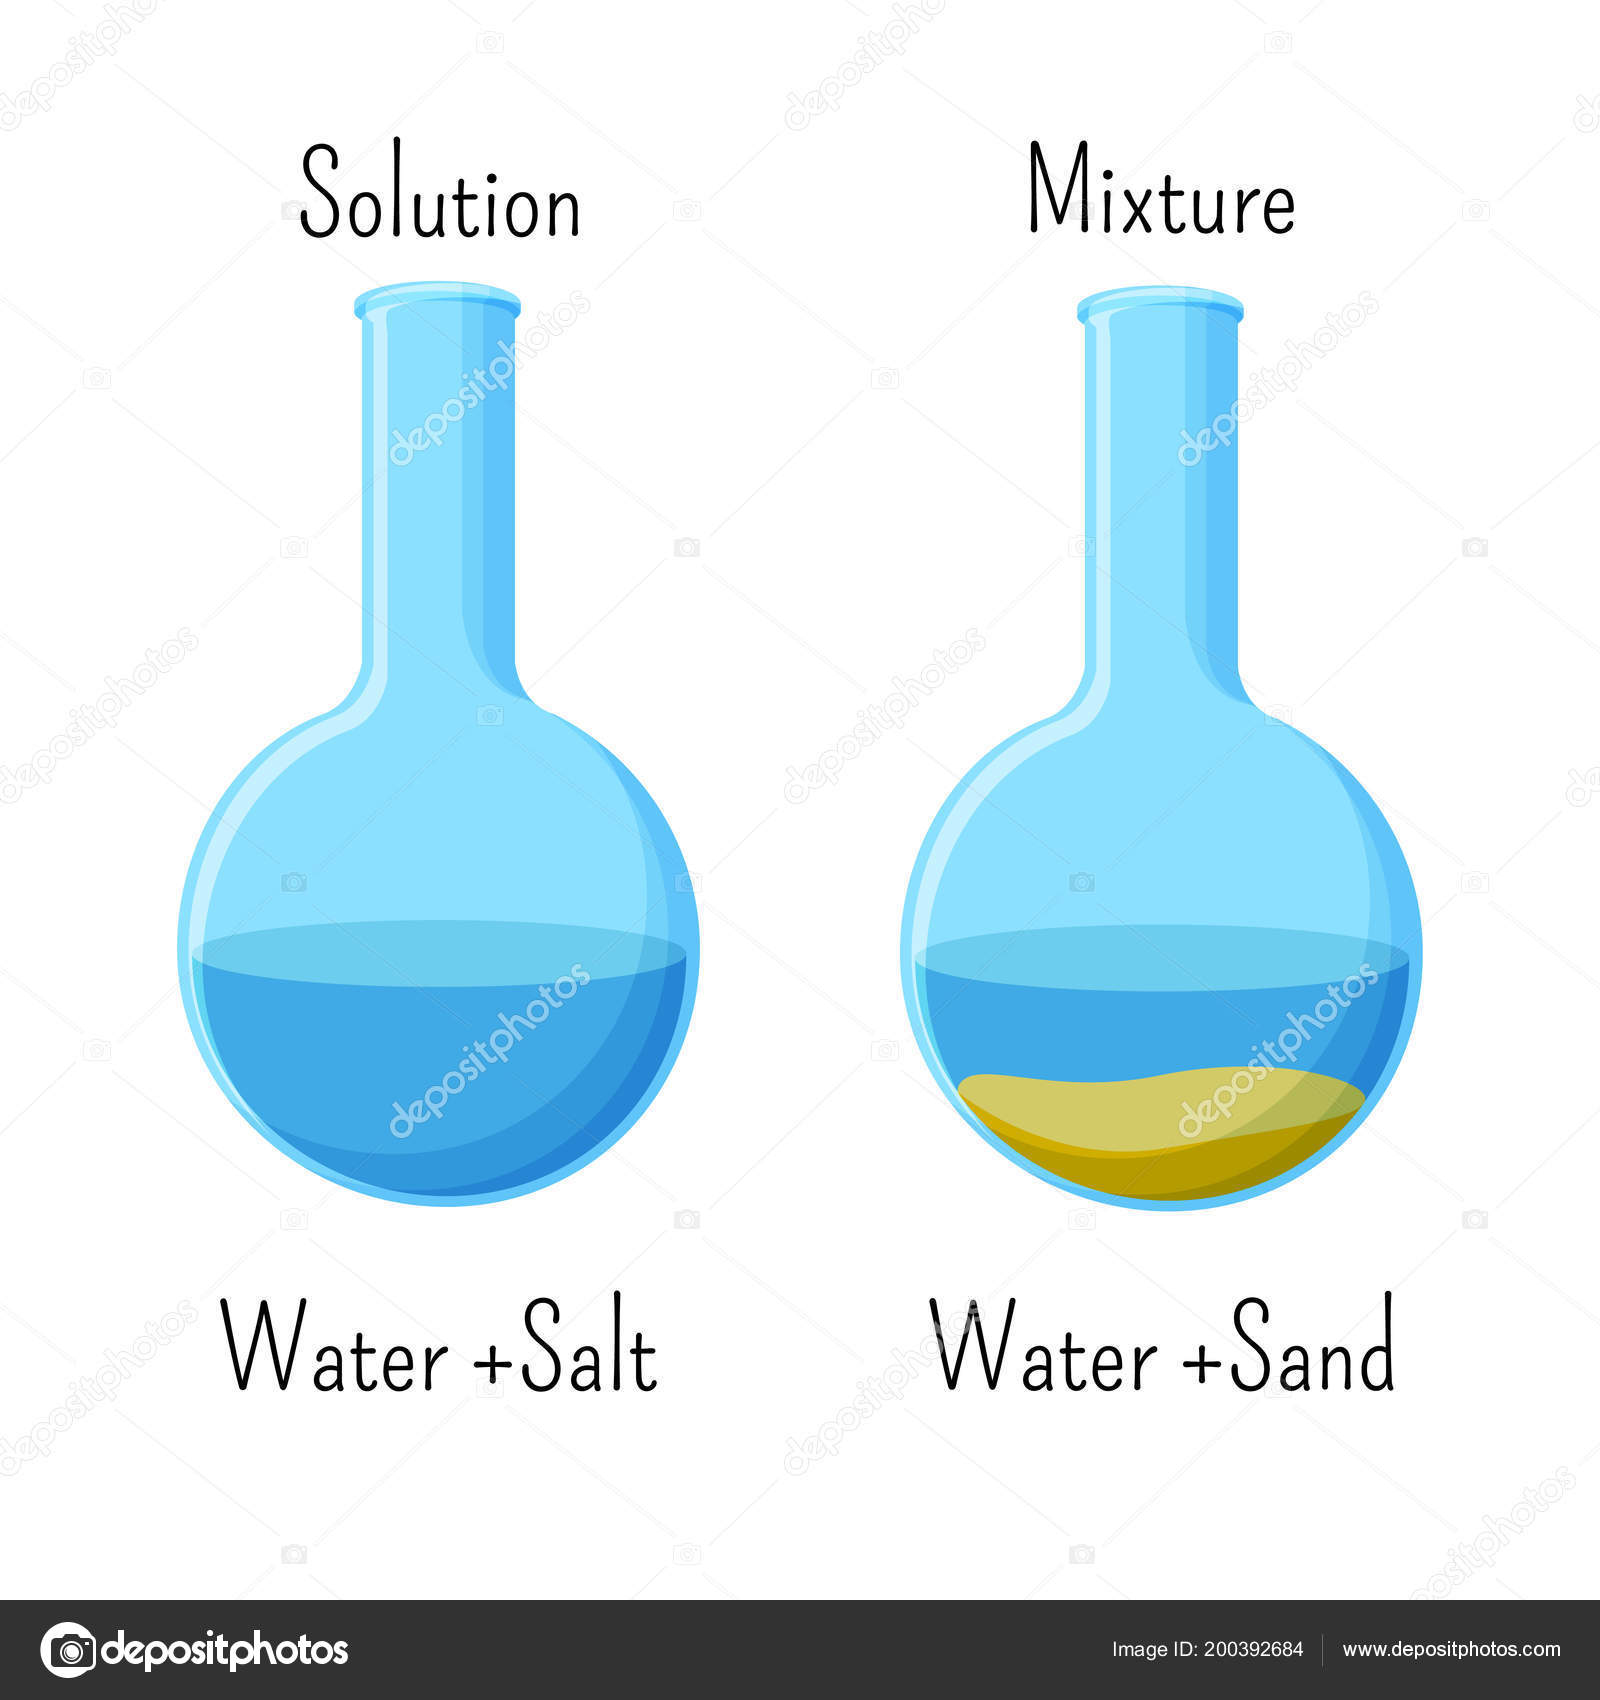 Salt and water mixture